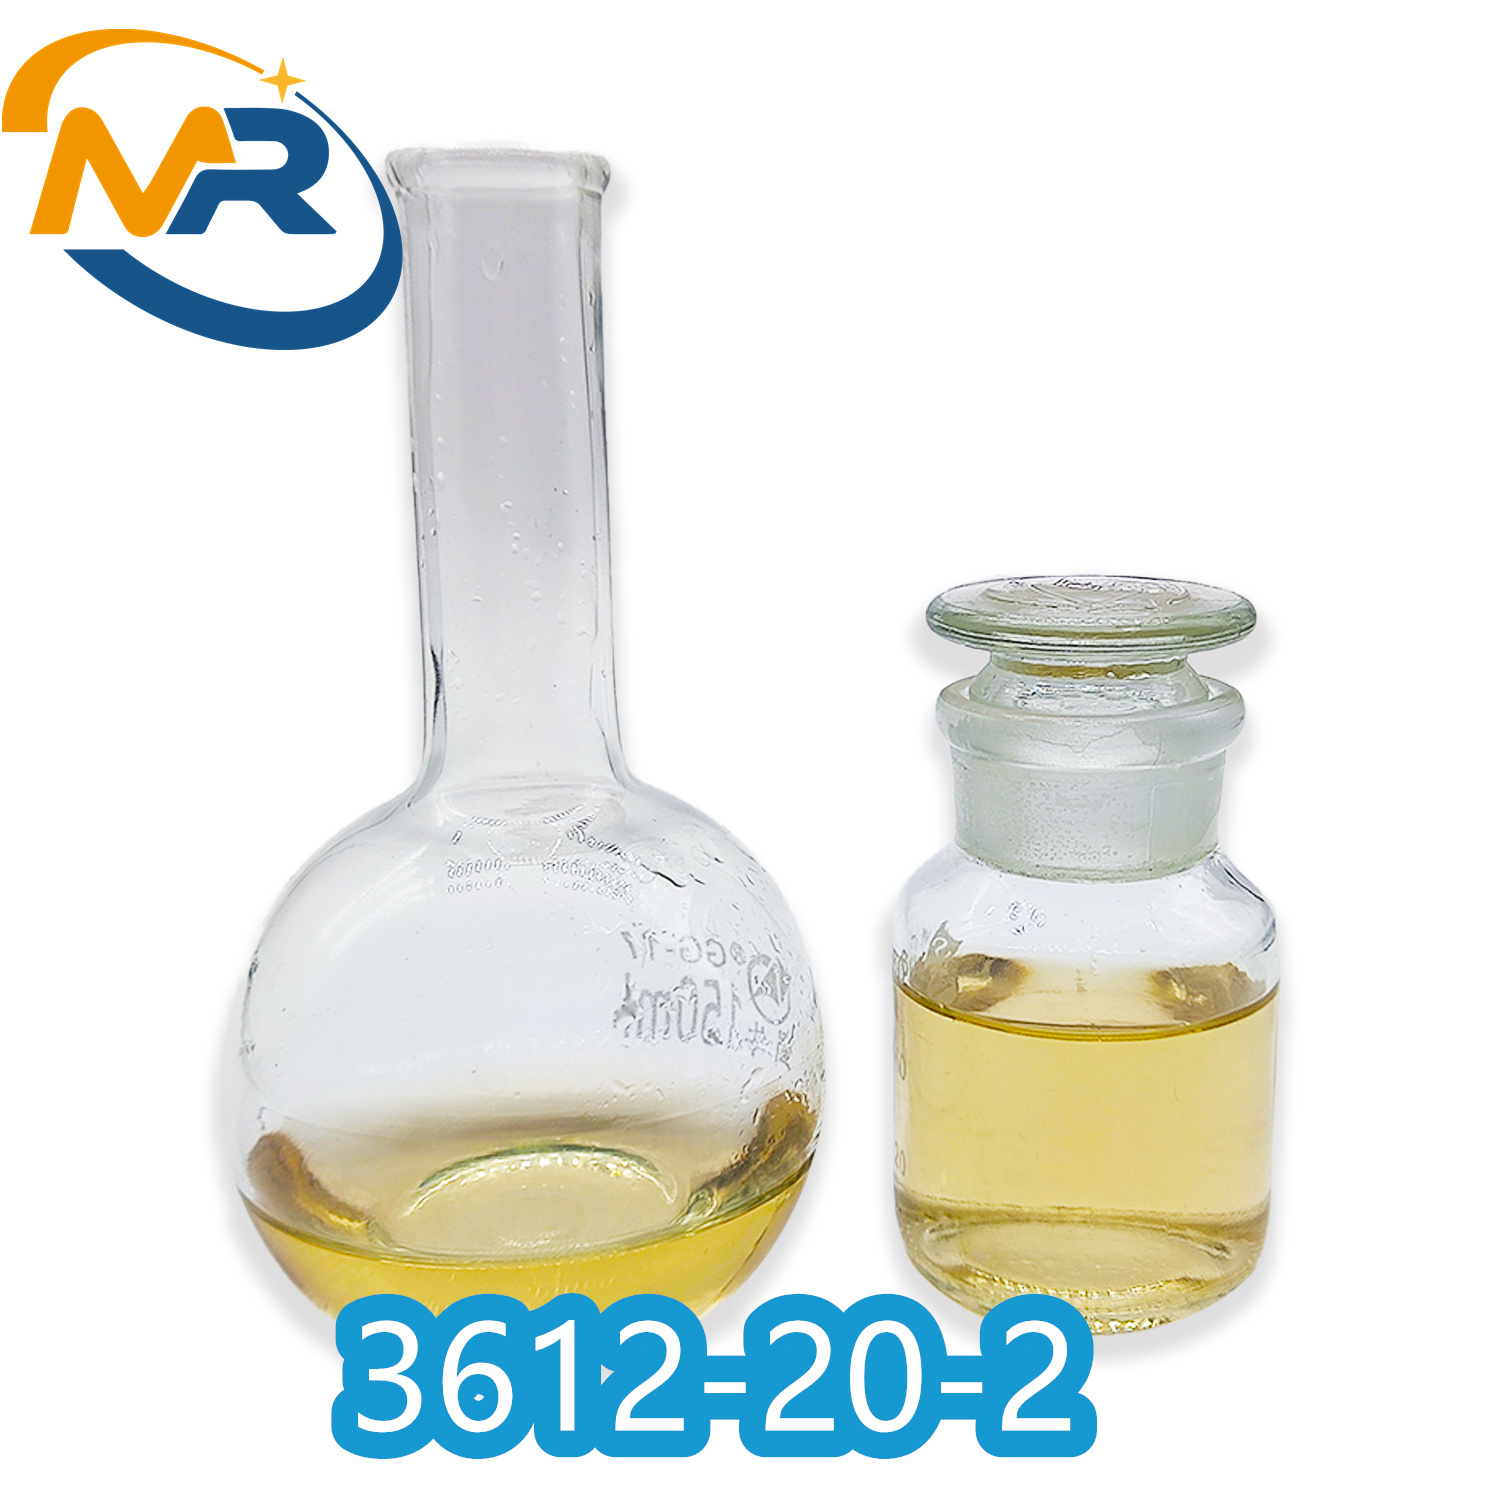 99% 1-Benzyl-4-piperidone CAS 3612-20-2